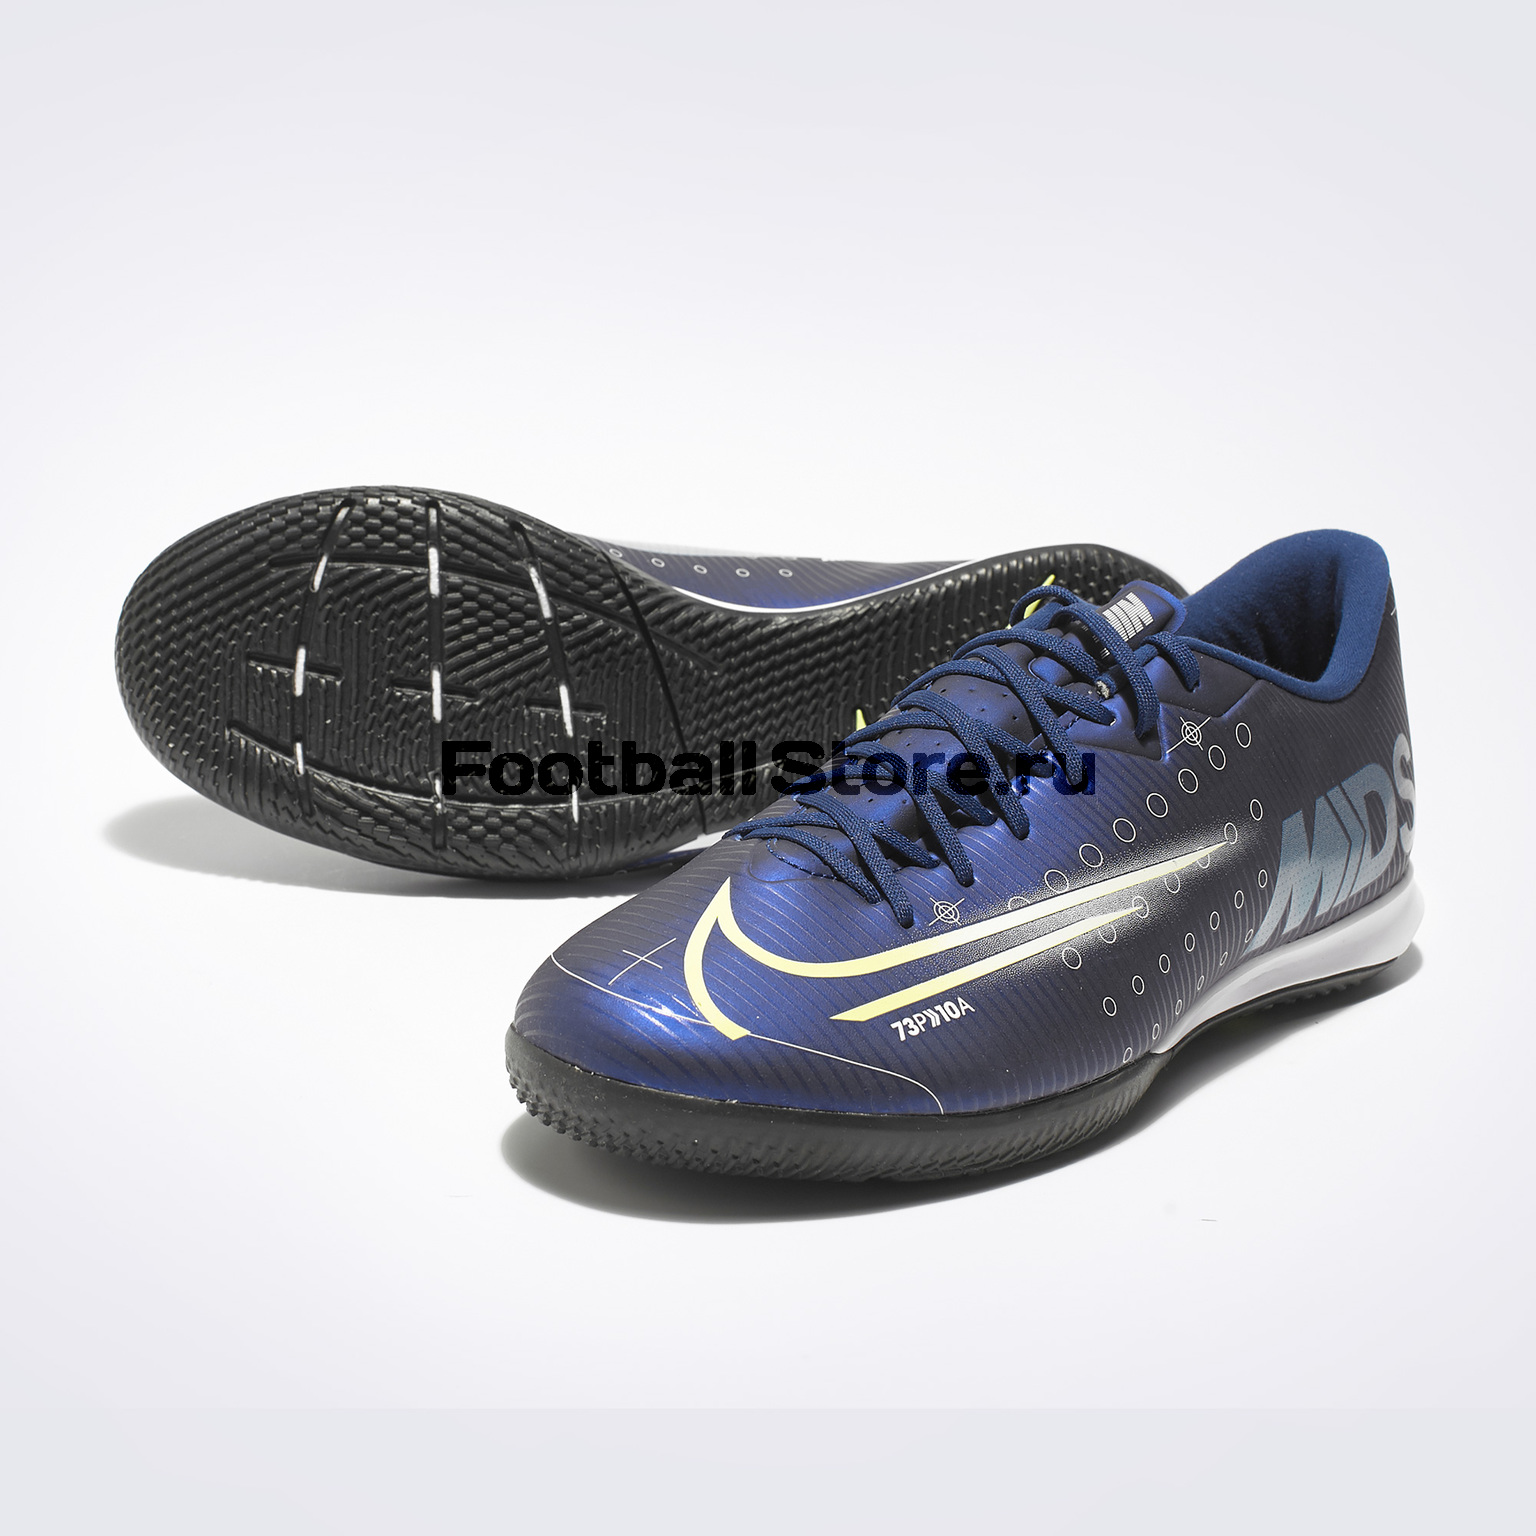 Футзалки Nike Vapor 13 Academy MDS IC CJ1300-401